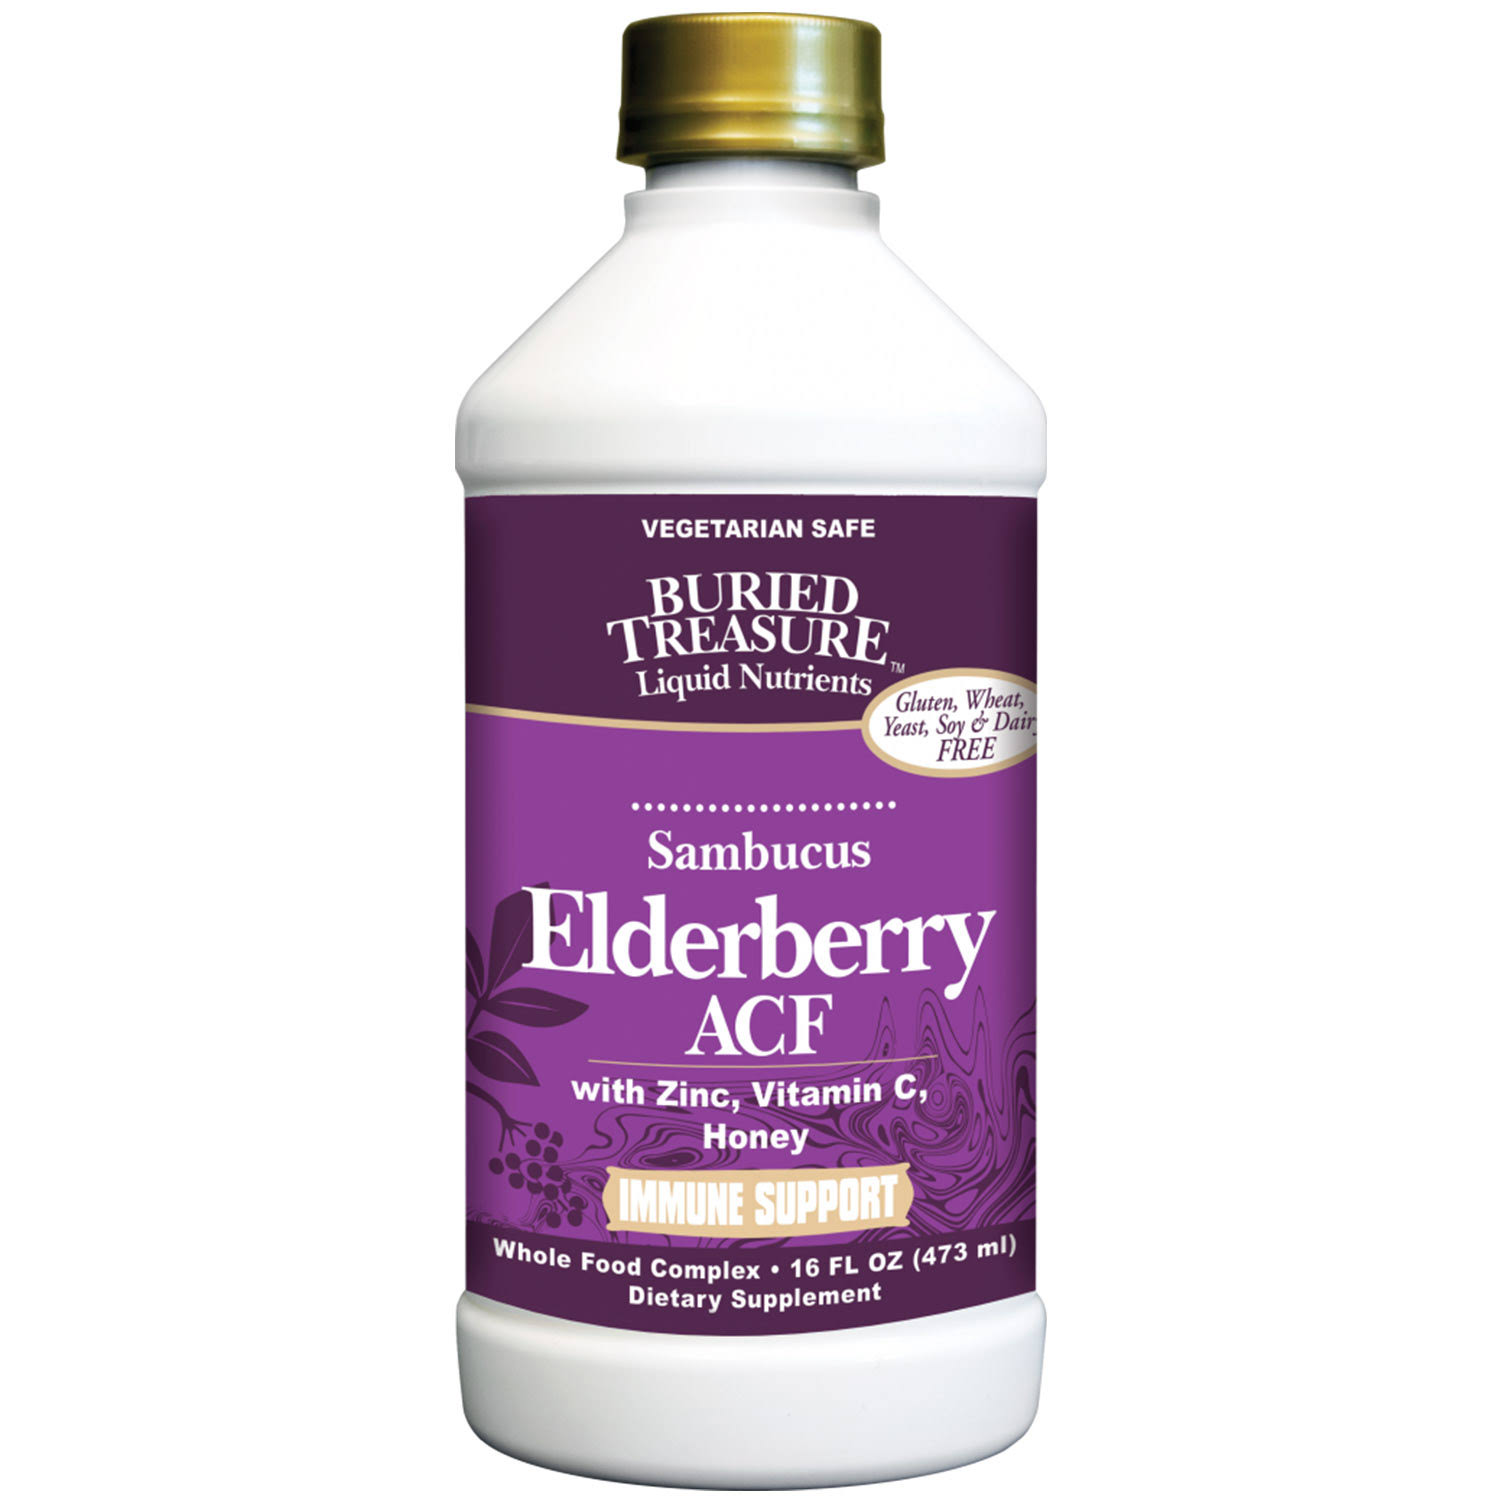 Buried Treasure Elderberry ACF Immune Support 16 fl oz (473 ml)